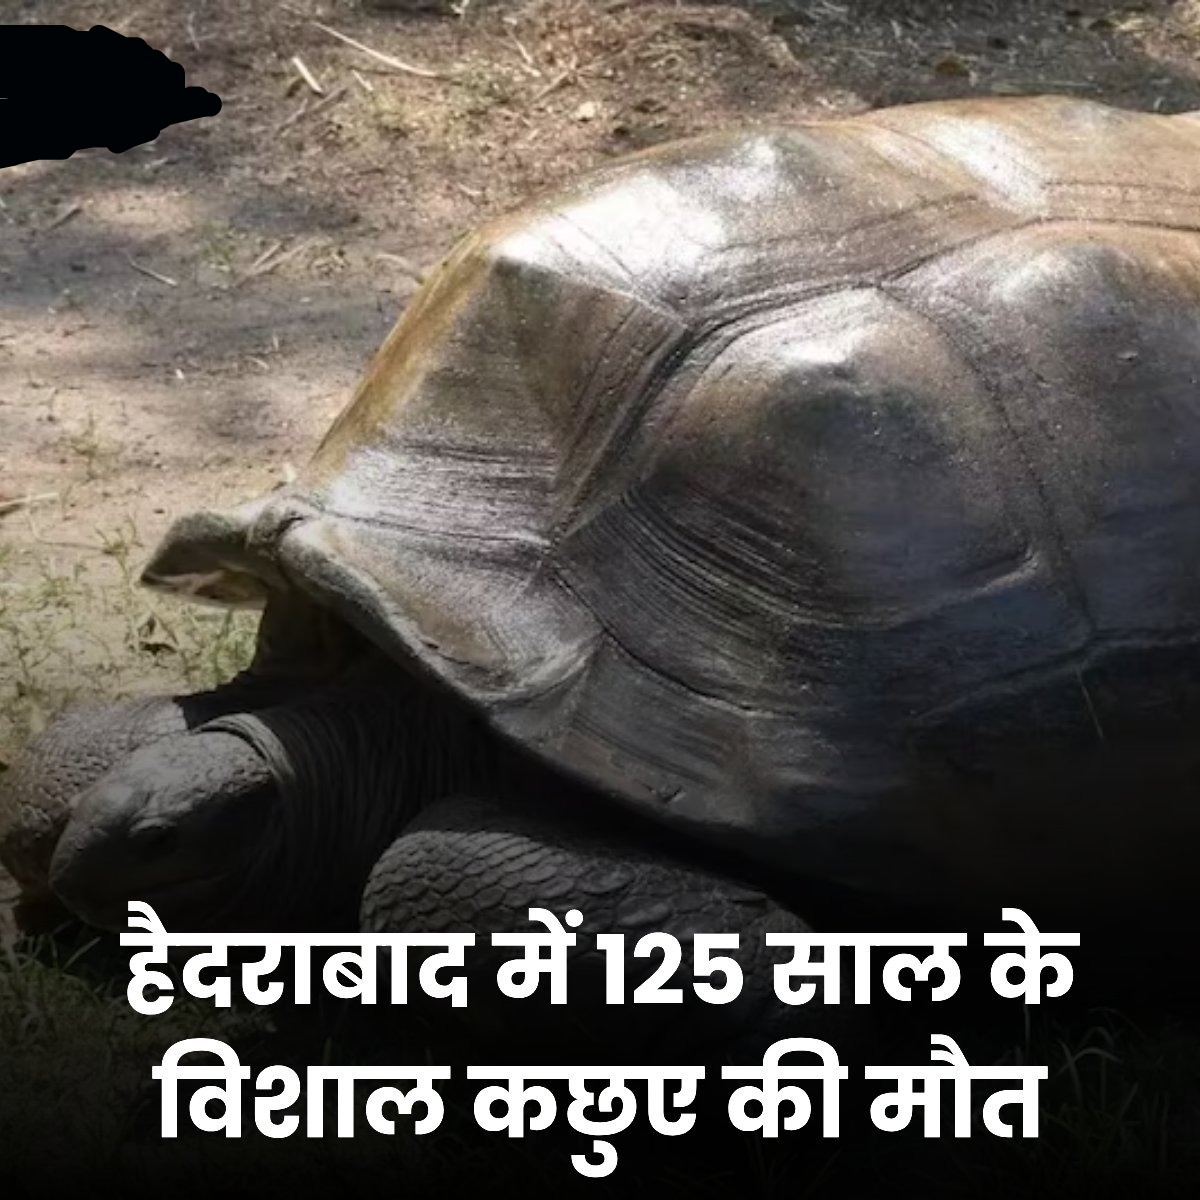 हैदराबाद में 125 साल के विशाल कछुए की मौत!
#Hyderabad #Turtel #NehruZoologicalPark #Zoo #OldTurtle #HyderabadZoo #TurtleDeath #HyderabadNews #hindinews #latestnews #latestupdates #India #latestnewshindi #Legal_Library #growmoreloansolutions #savera24newschannel